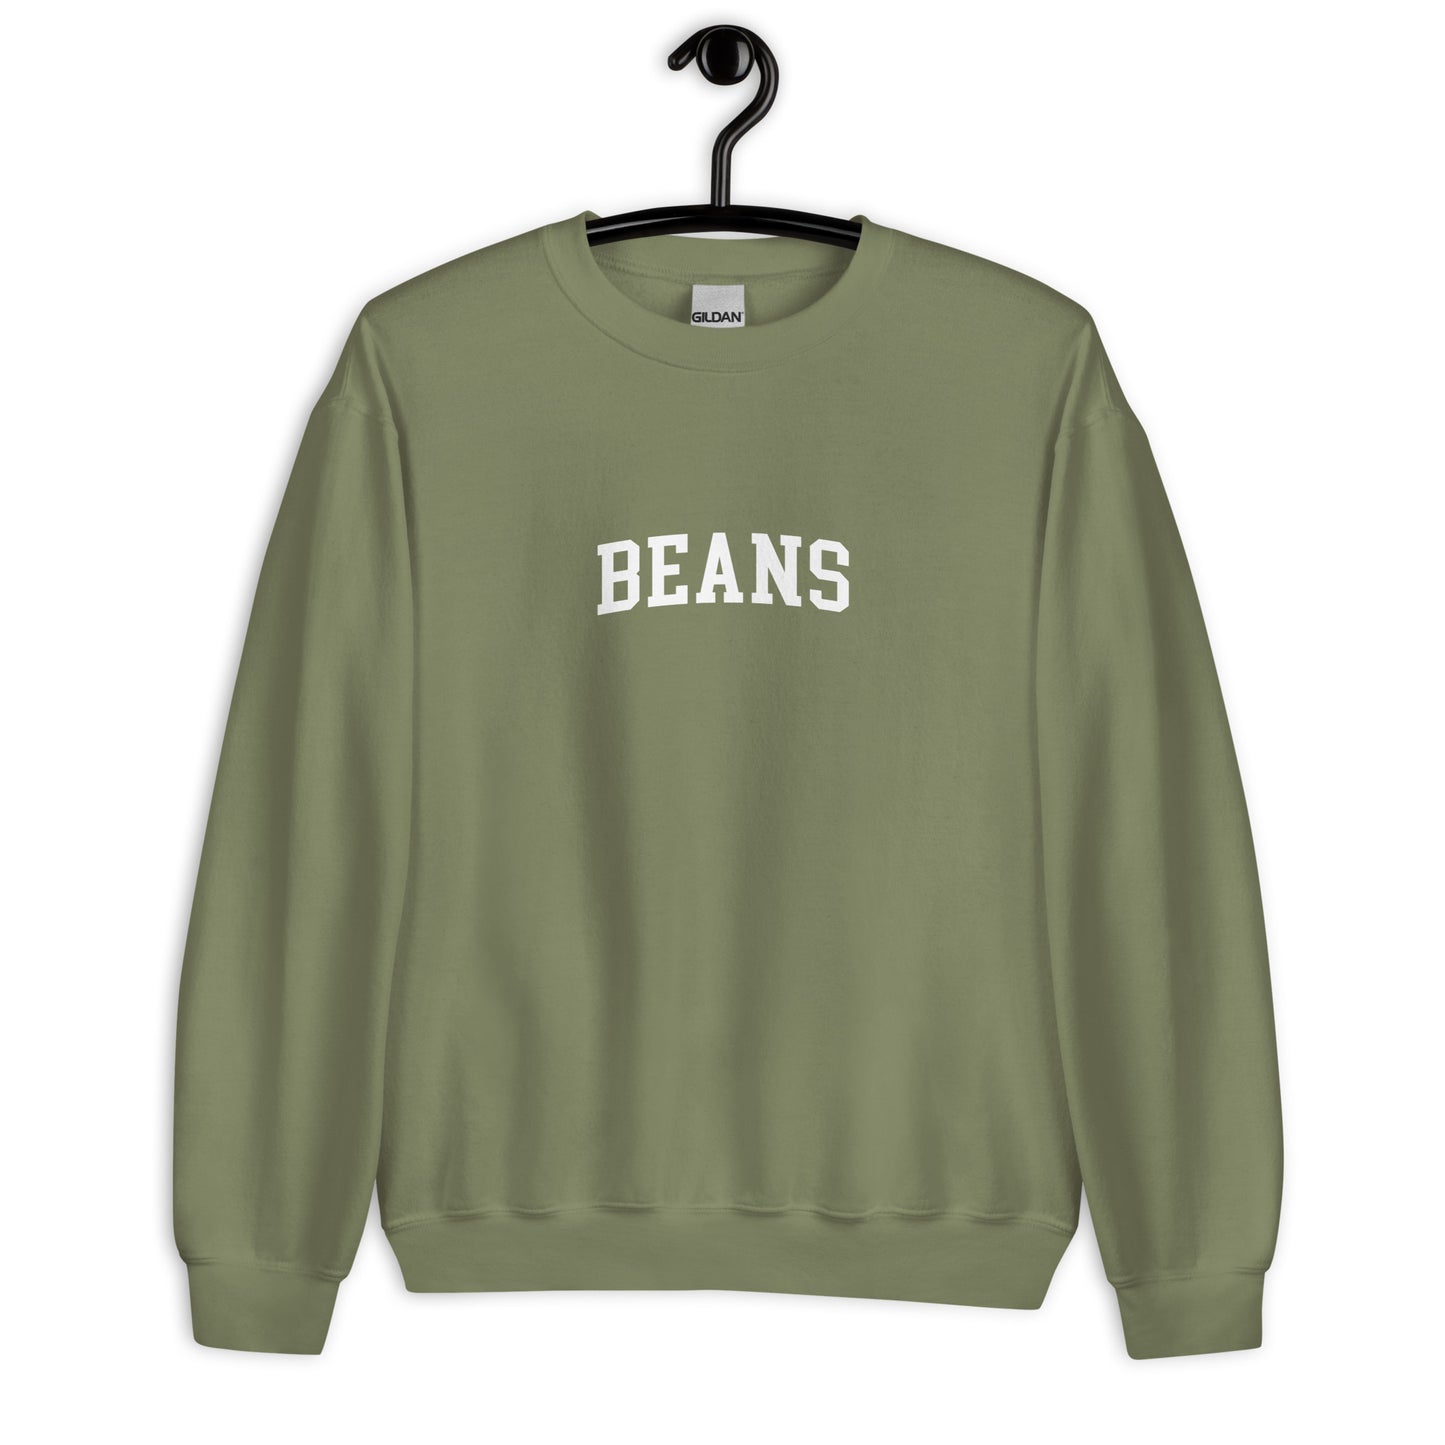 Beans Sweatshirt - Arched Font